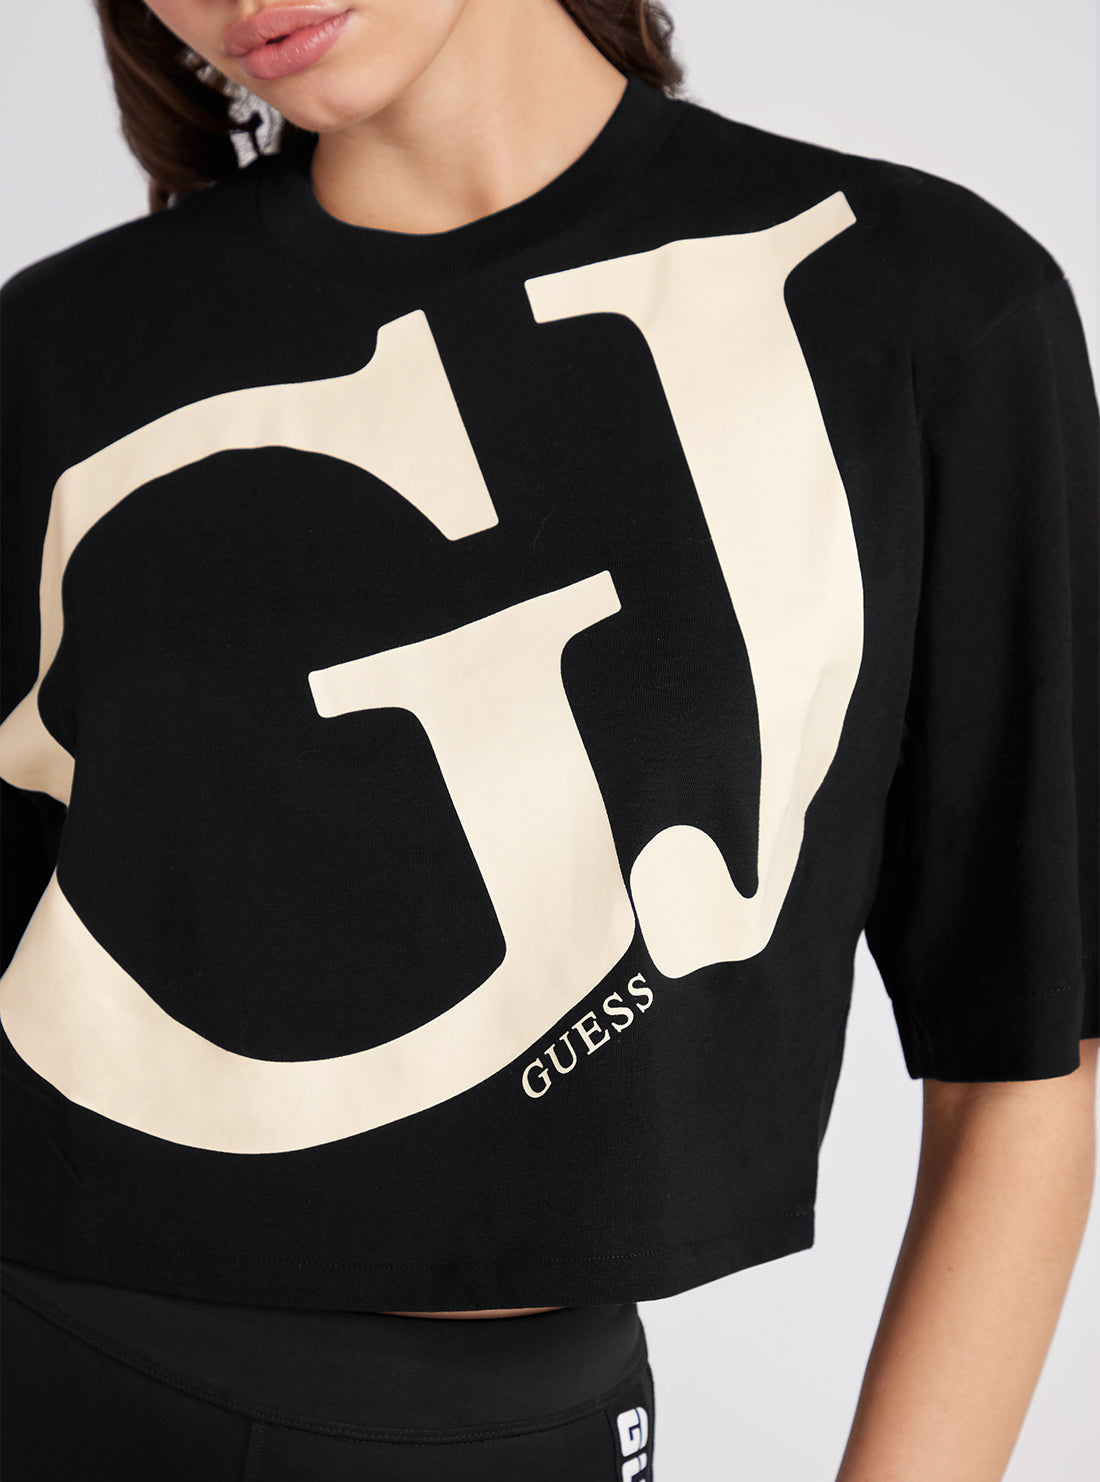 Black GJ Logo Kimono Active Crop T-Shirt | GUESS Women's Activewear | detail view